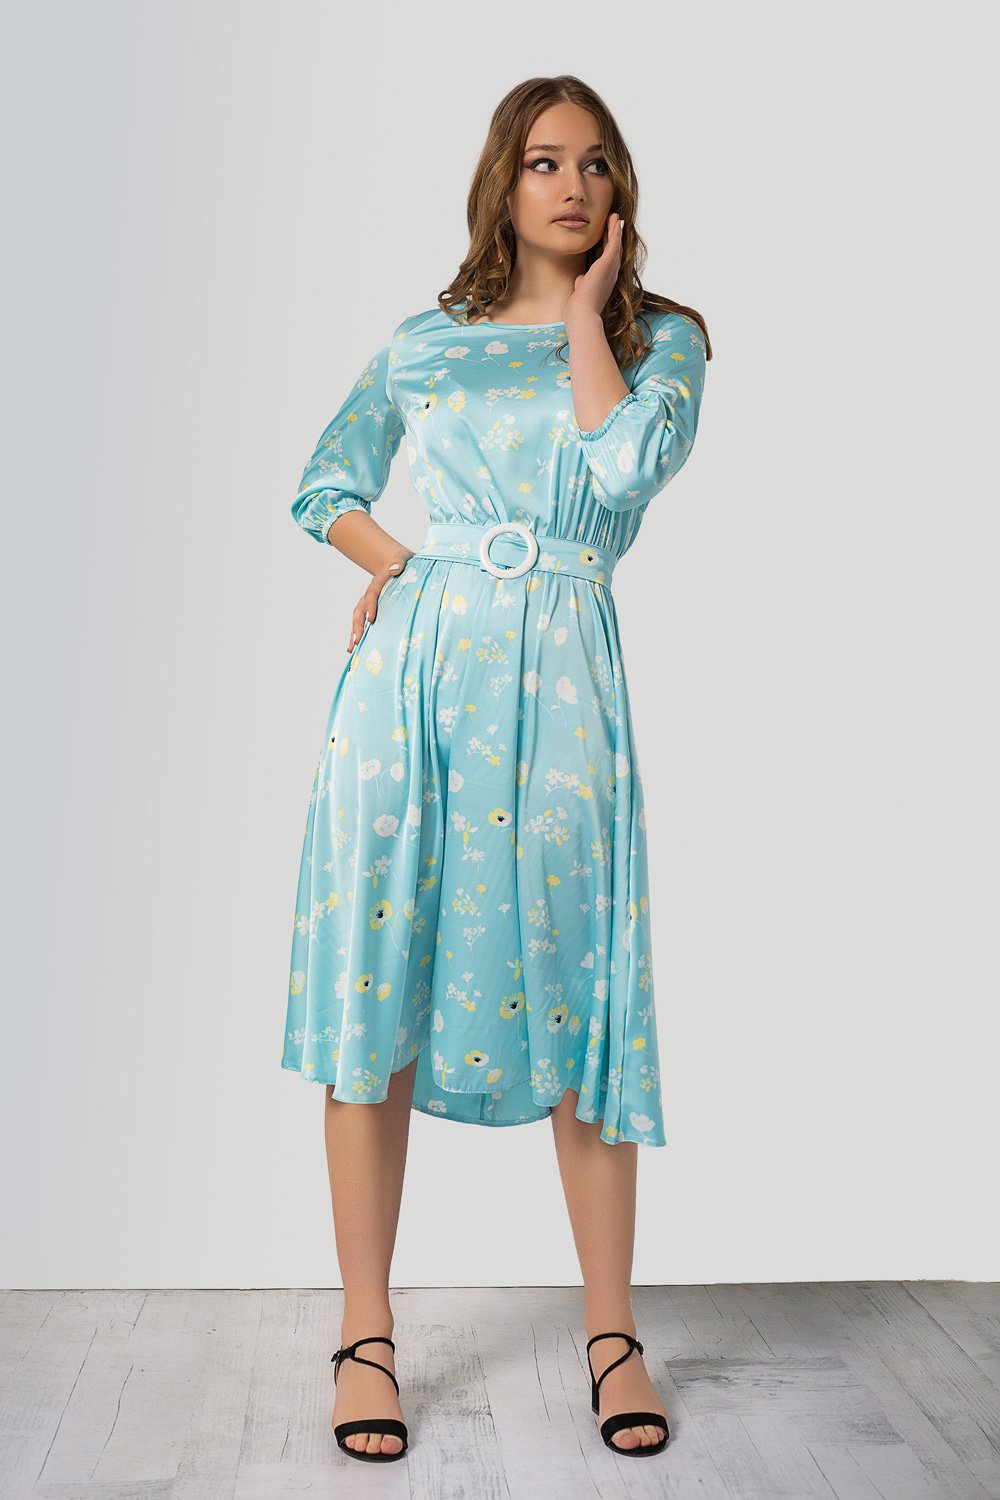 Turquoise silk dress